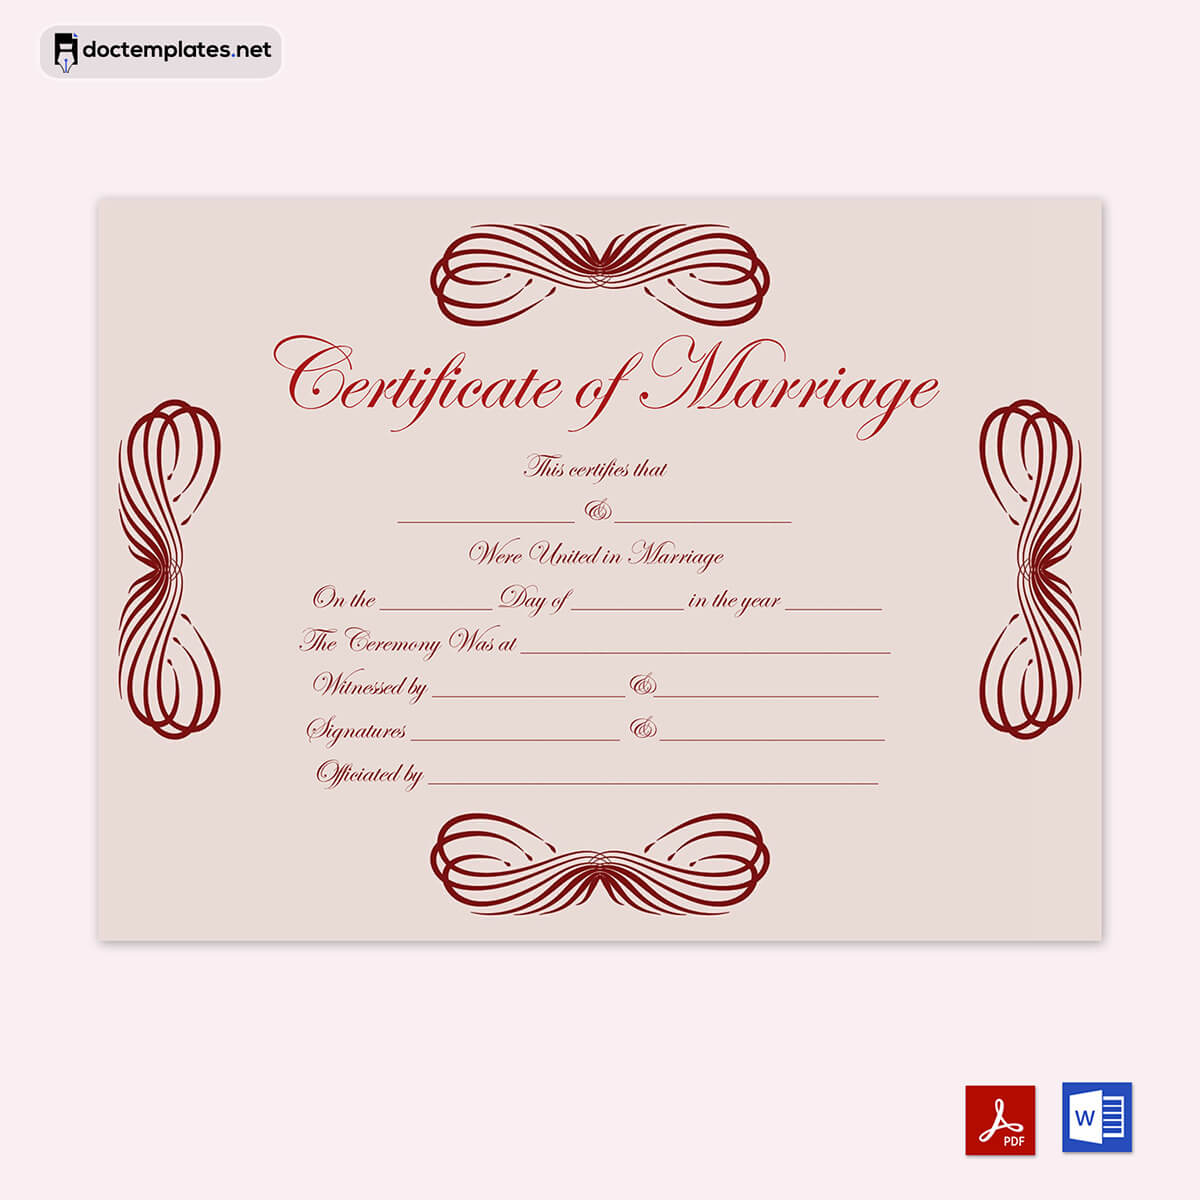  virtual marriage certificate 05